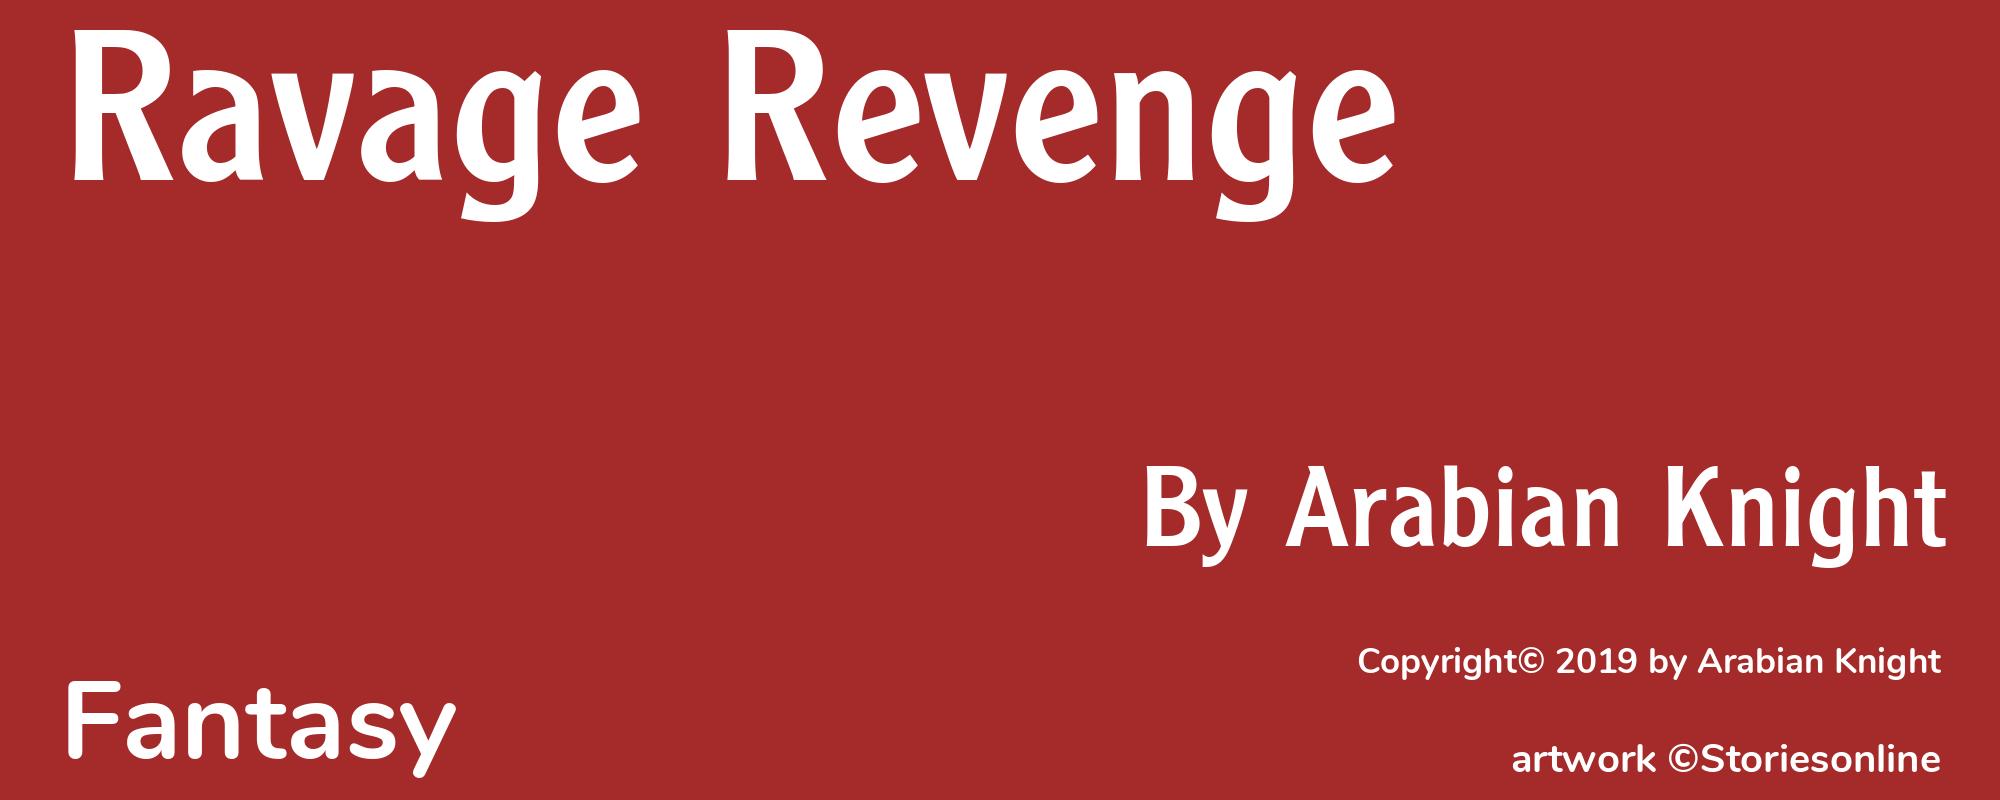 Ravage Revenge - Cover